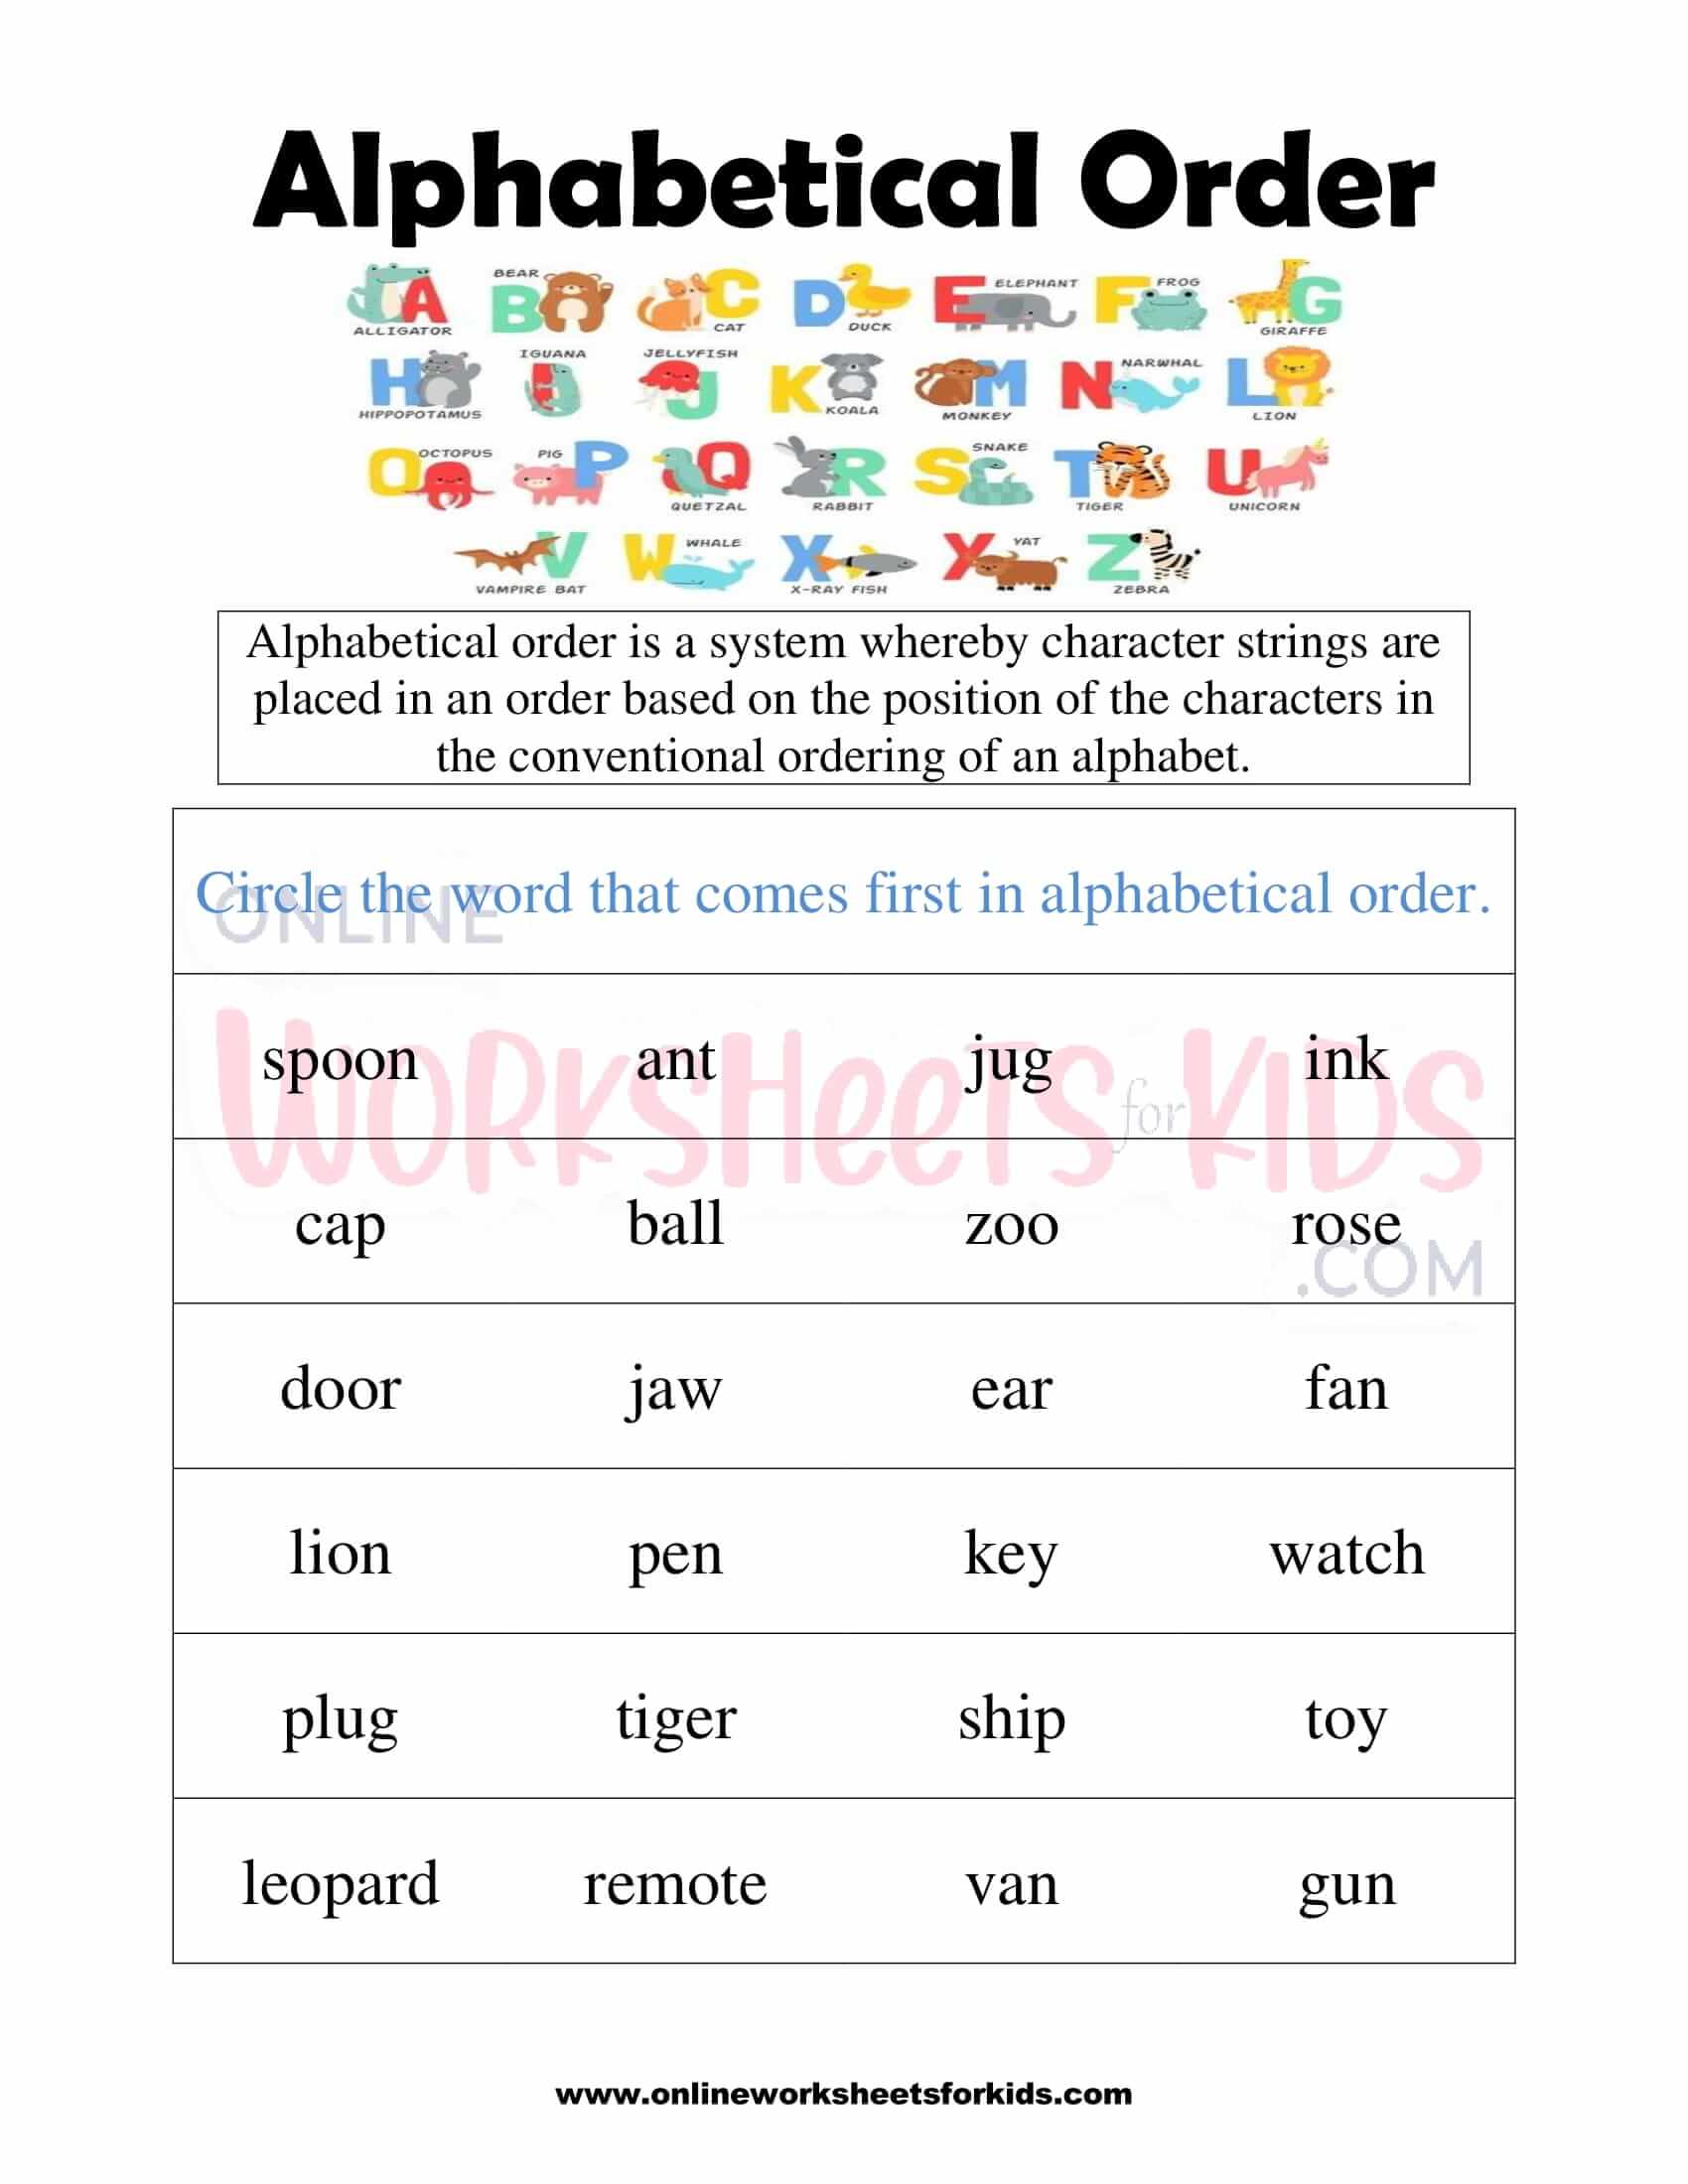 Alphabetical Order Worksheet For Class 1